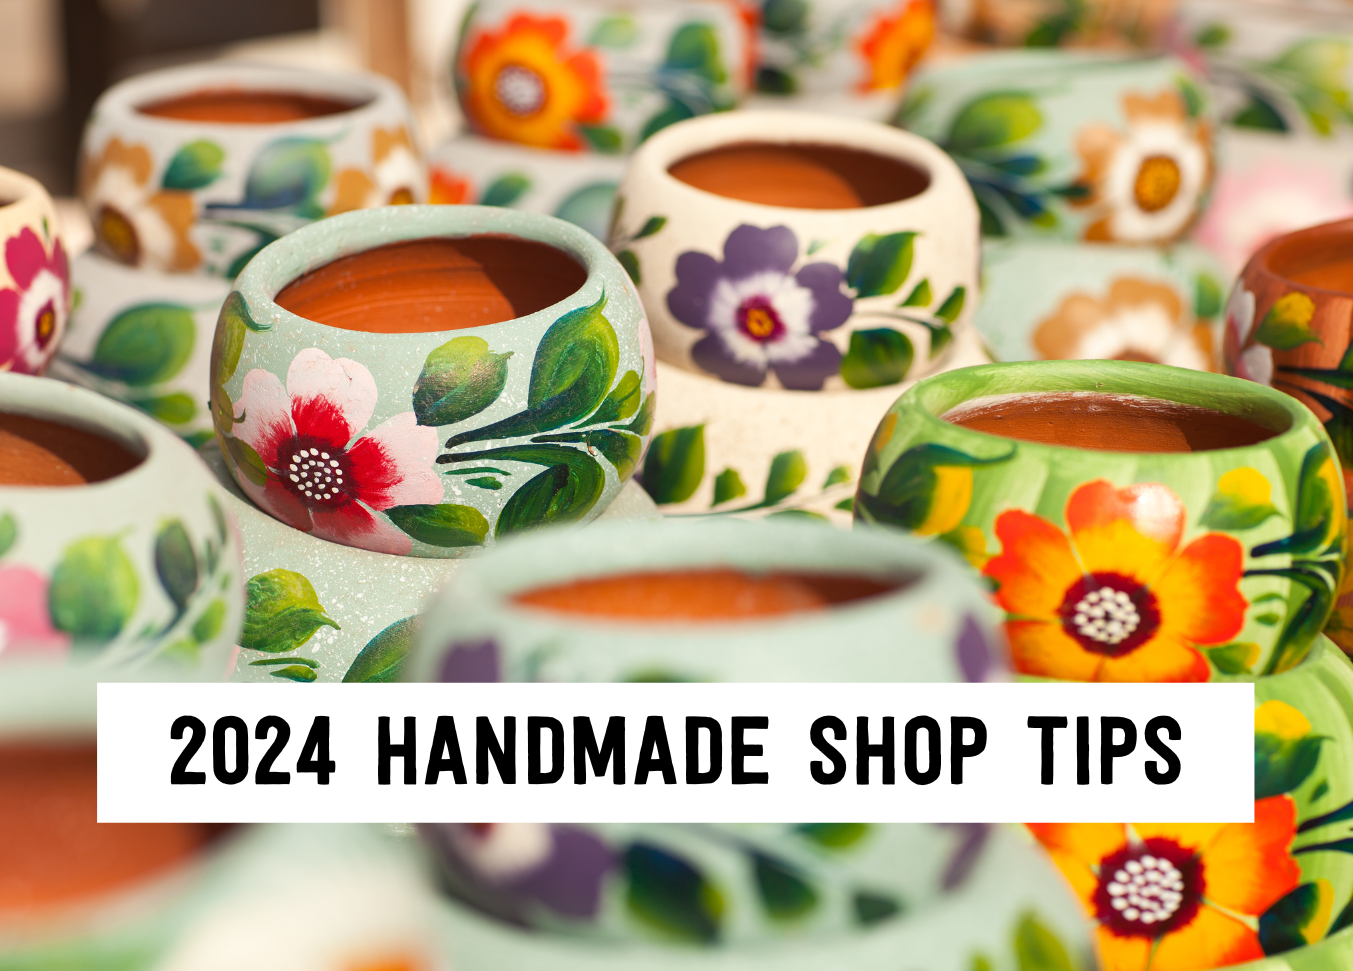 2024 handmade shop tips | Tizzit.co - start and grow a successful handmade business